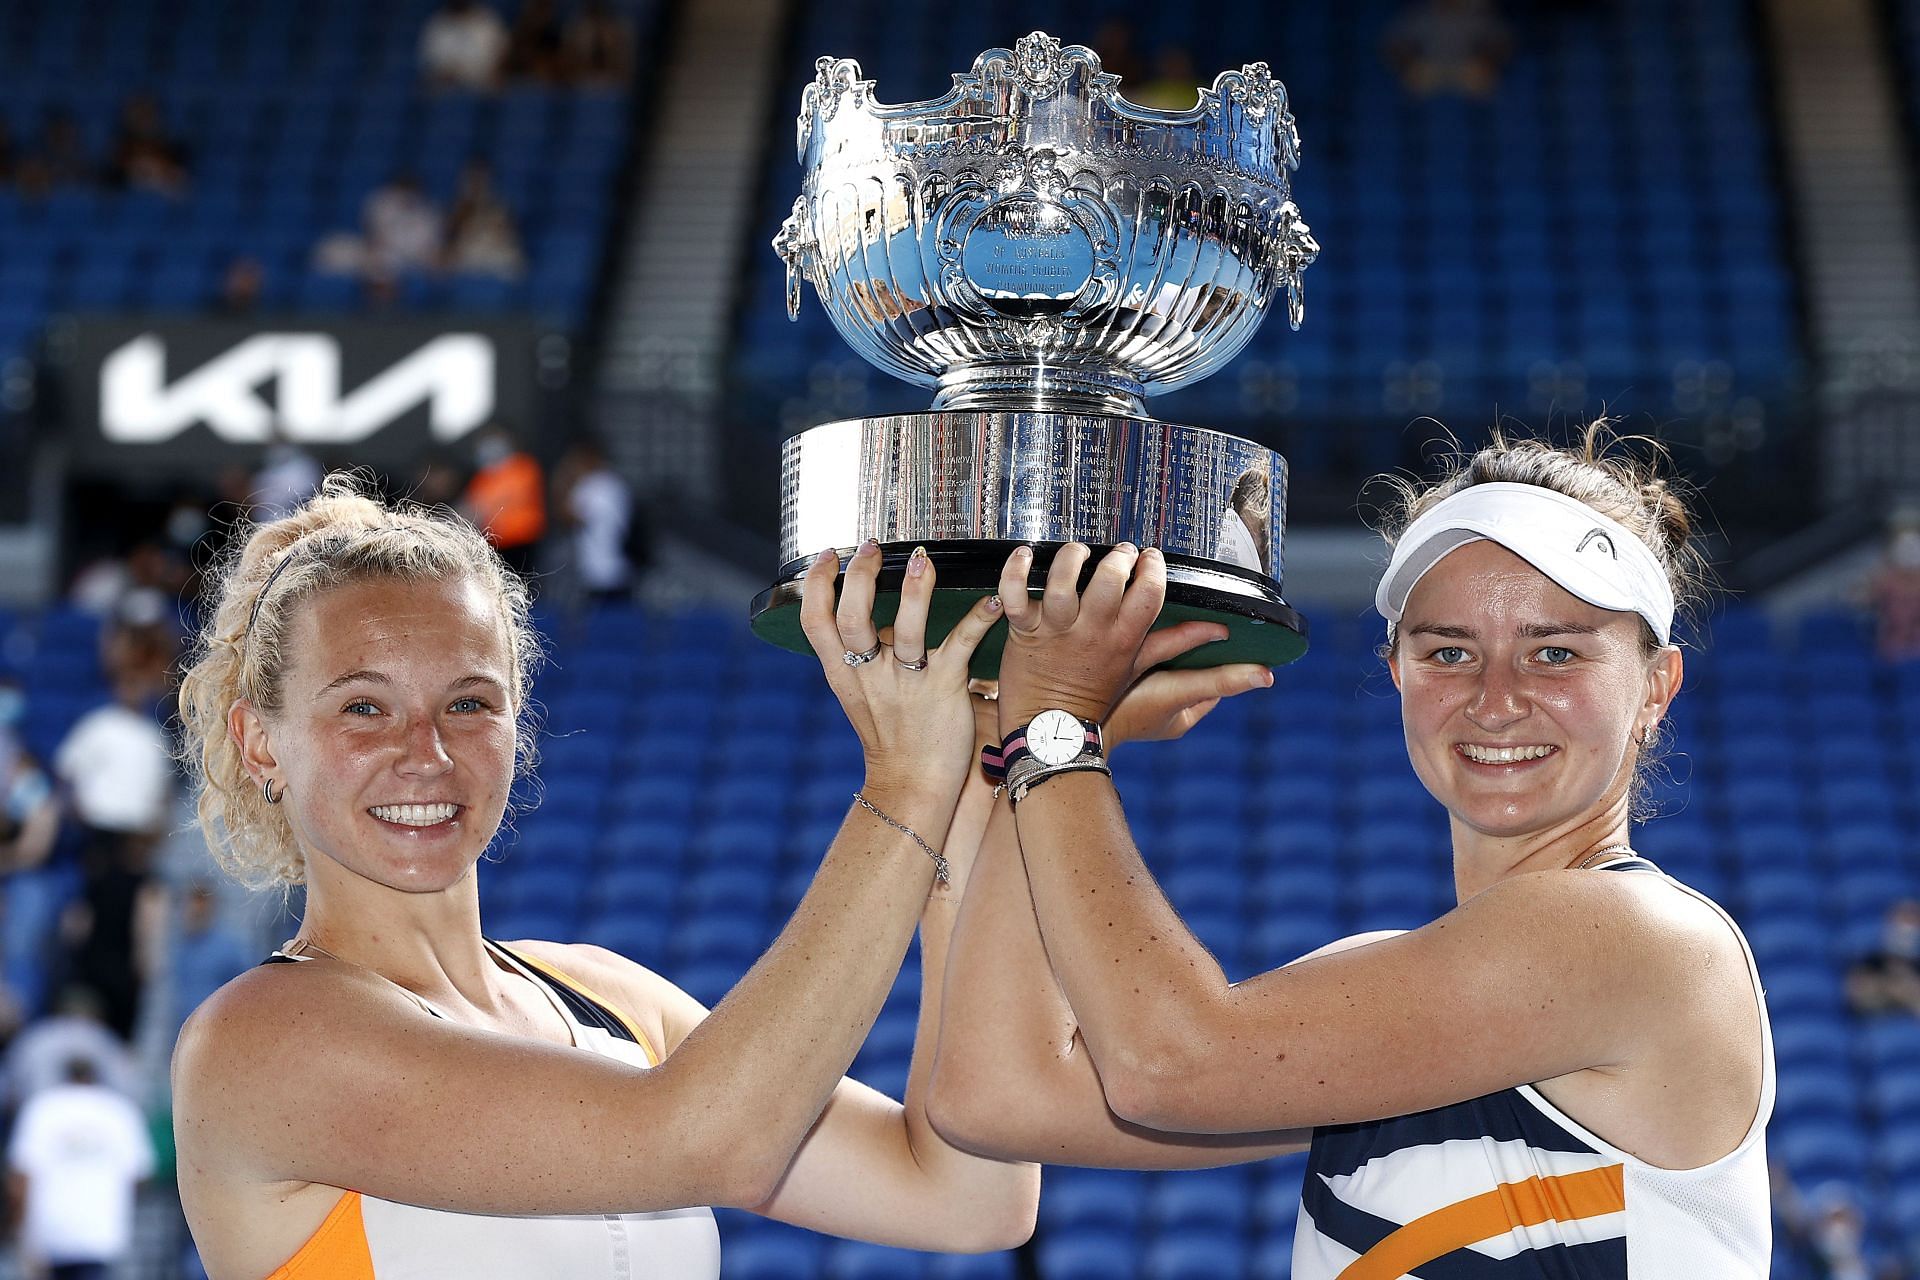 The Czech duo won their fourth Grand Slam title